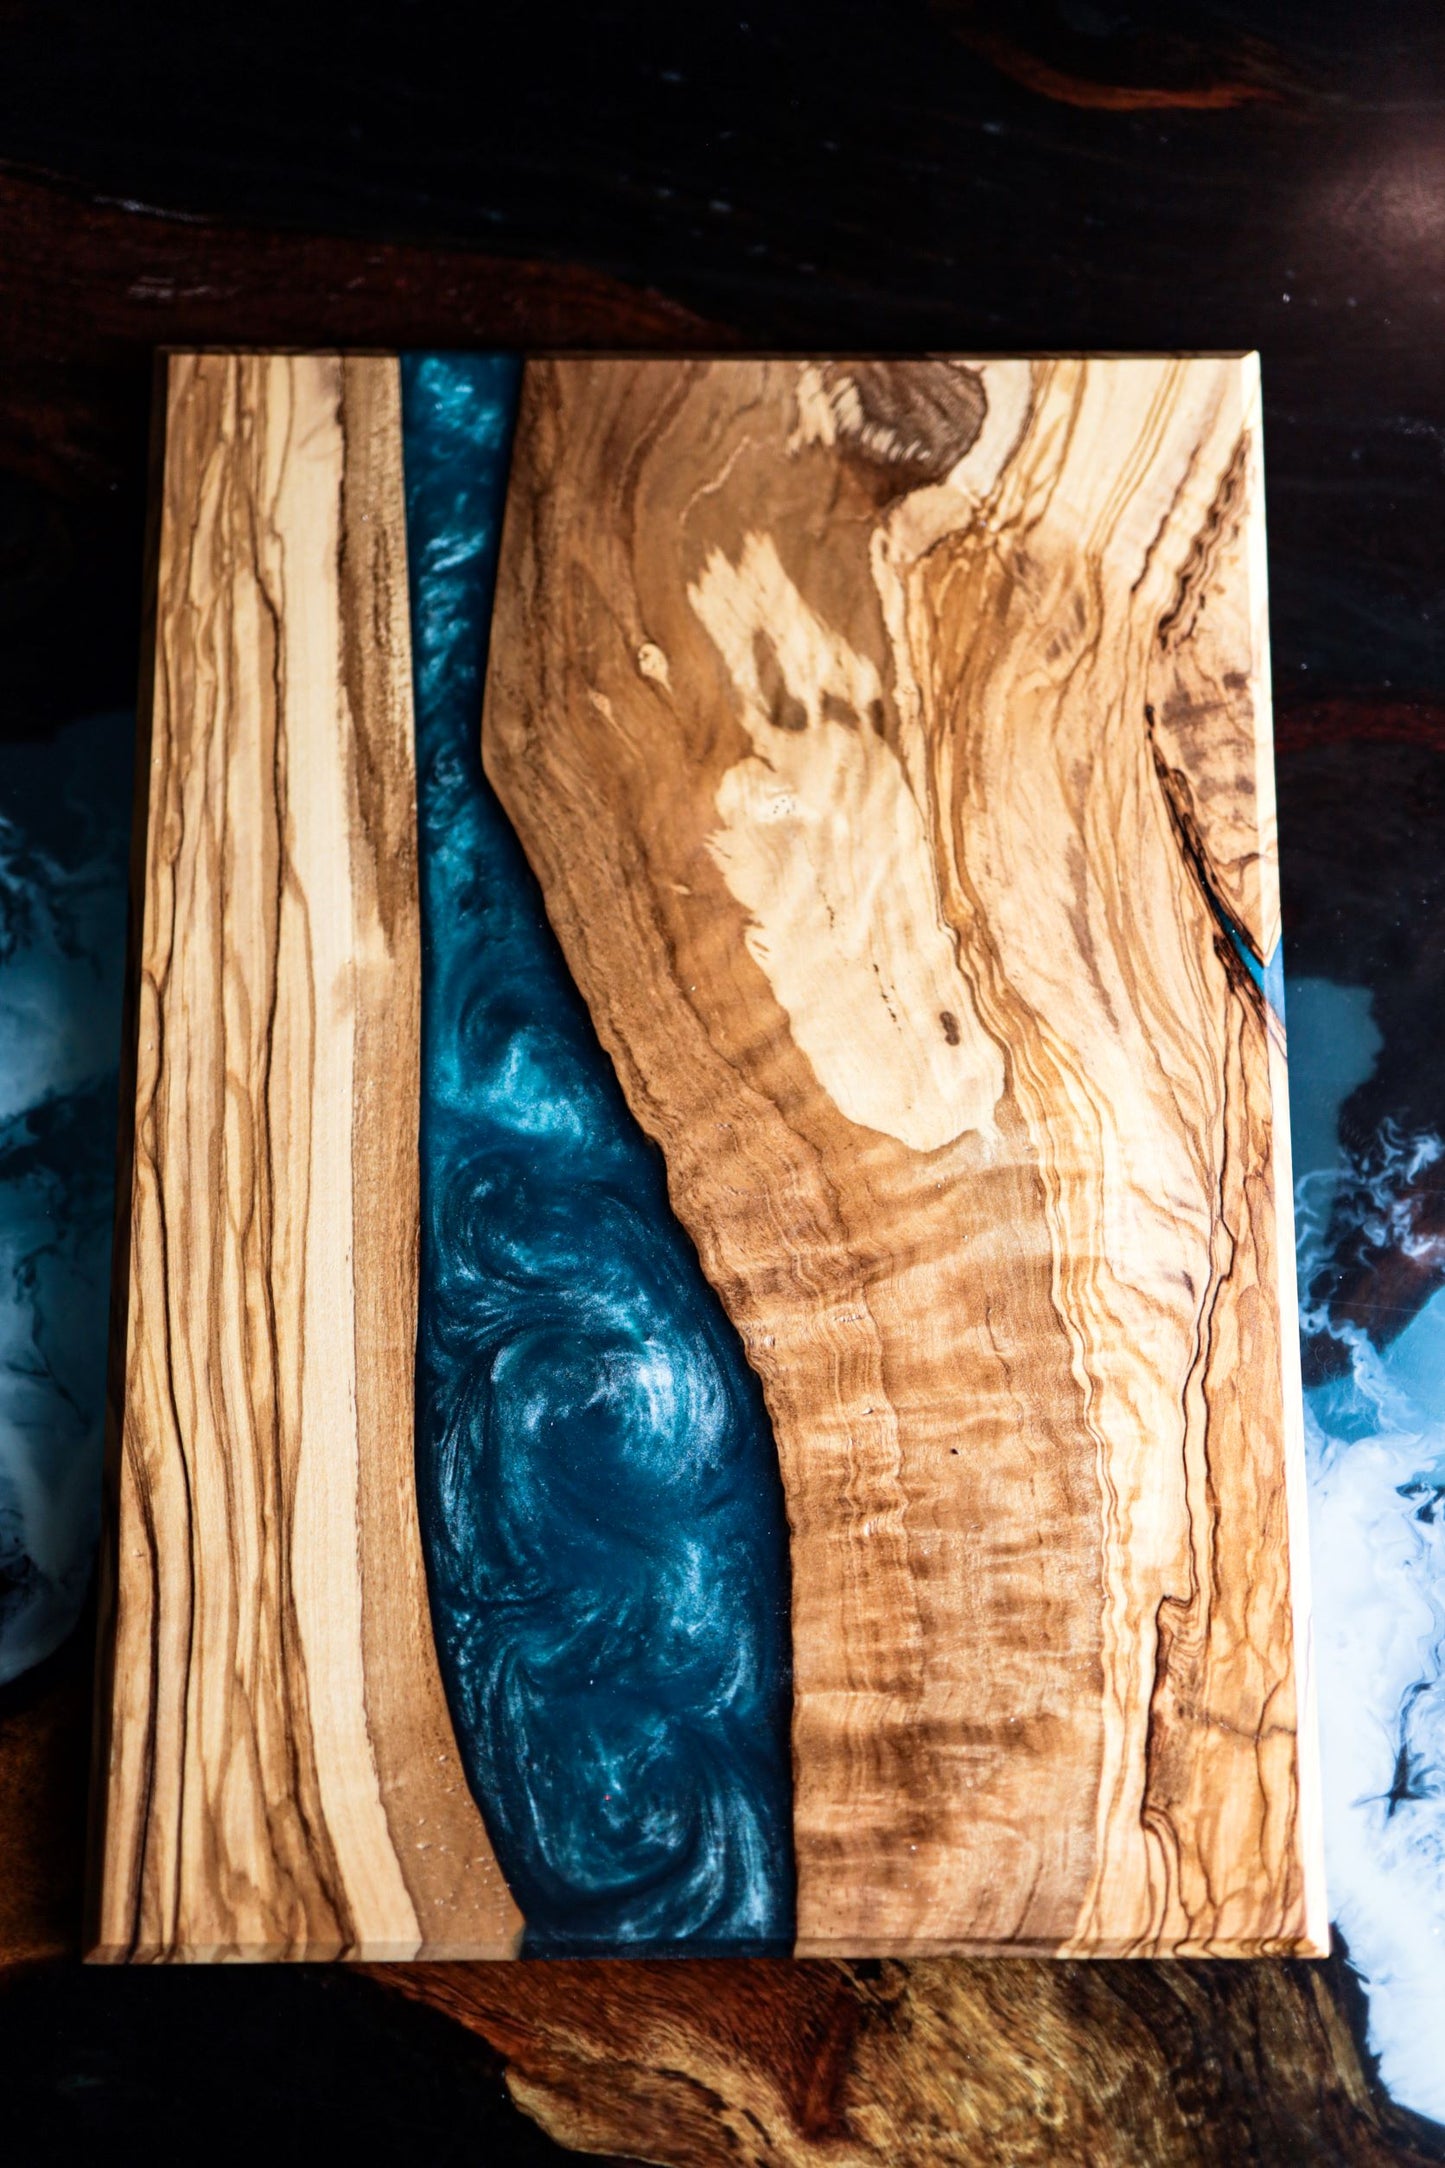 Handmade Olive Wood Live Edge Cutting Board with Glittery Blue River